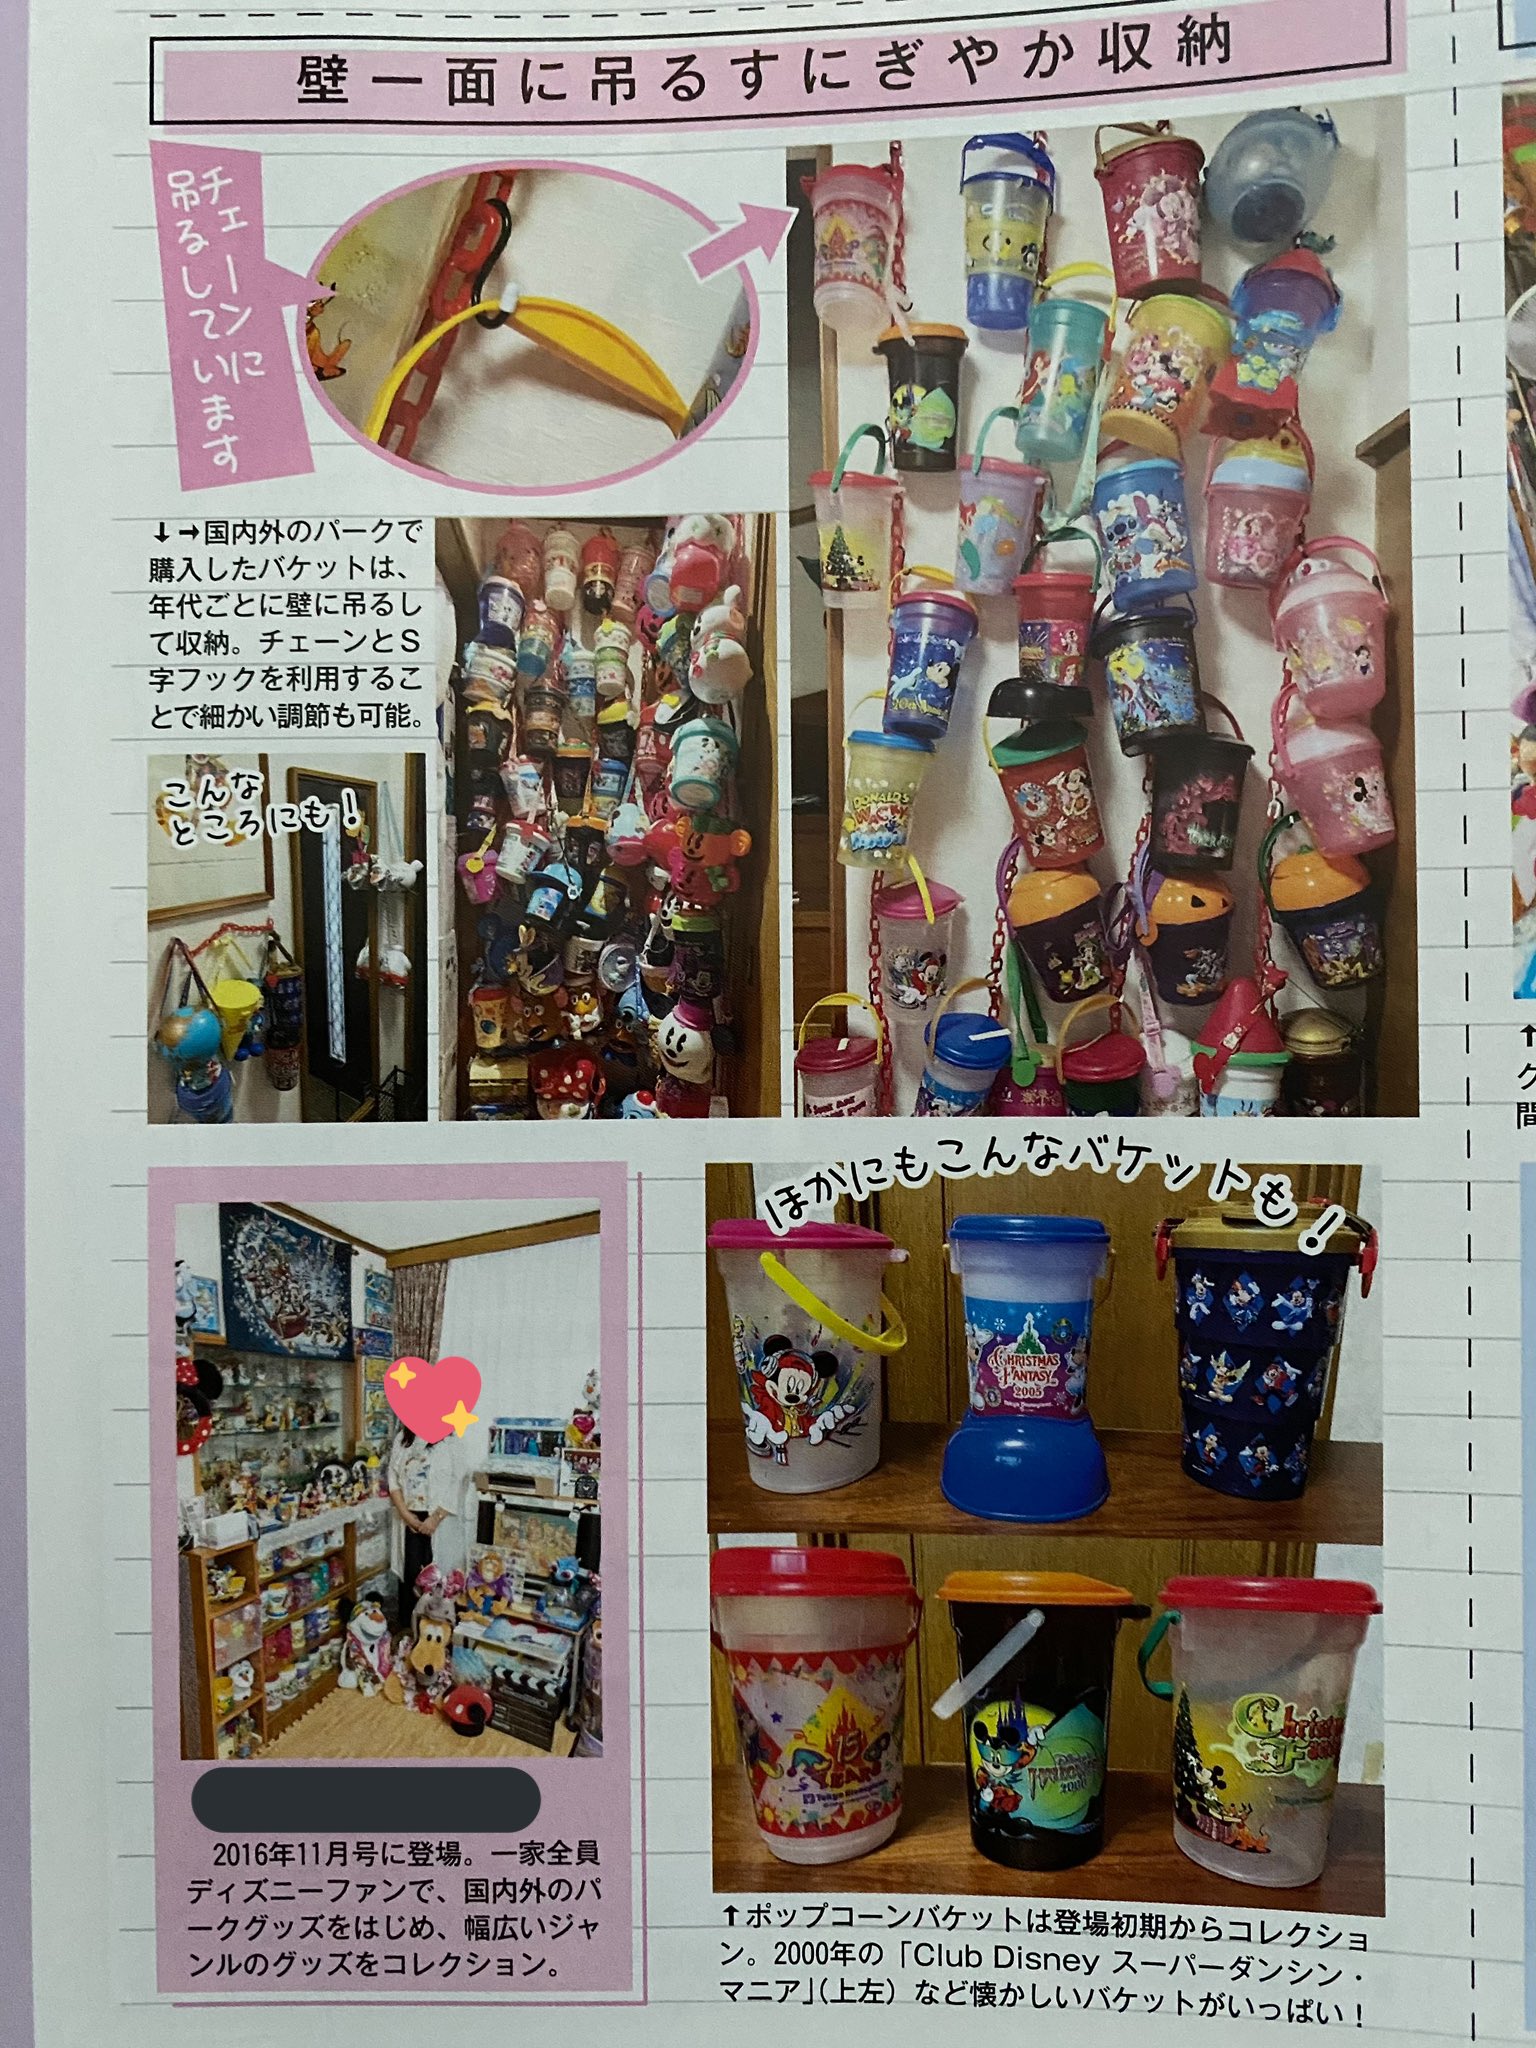 Yuki 今回発売されたディズニーファンの雑誌にポップコーンバケット特集として我が家が載りました ディズニー ファンに載るのは16年ぶり 飾り方と海外のパークで買ったバケットが載ってます ディズニーファン T Co Pnsgoxhfim Twitter